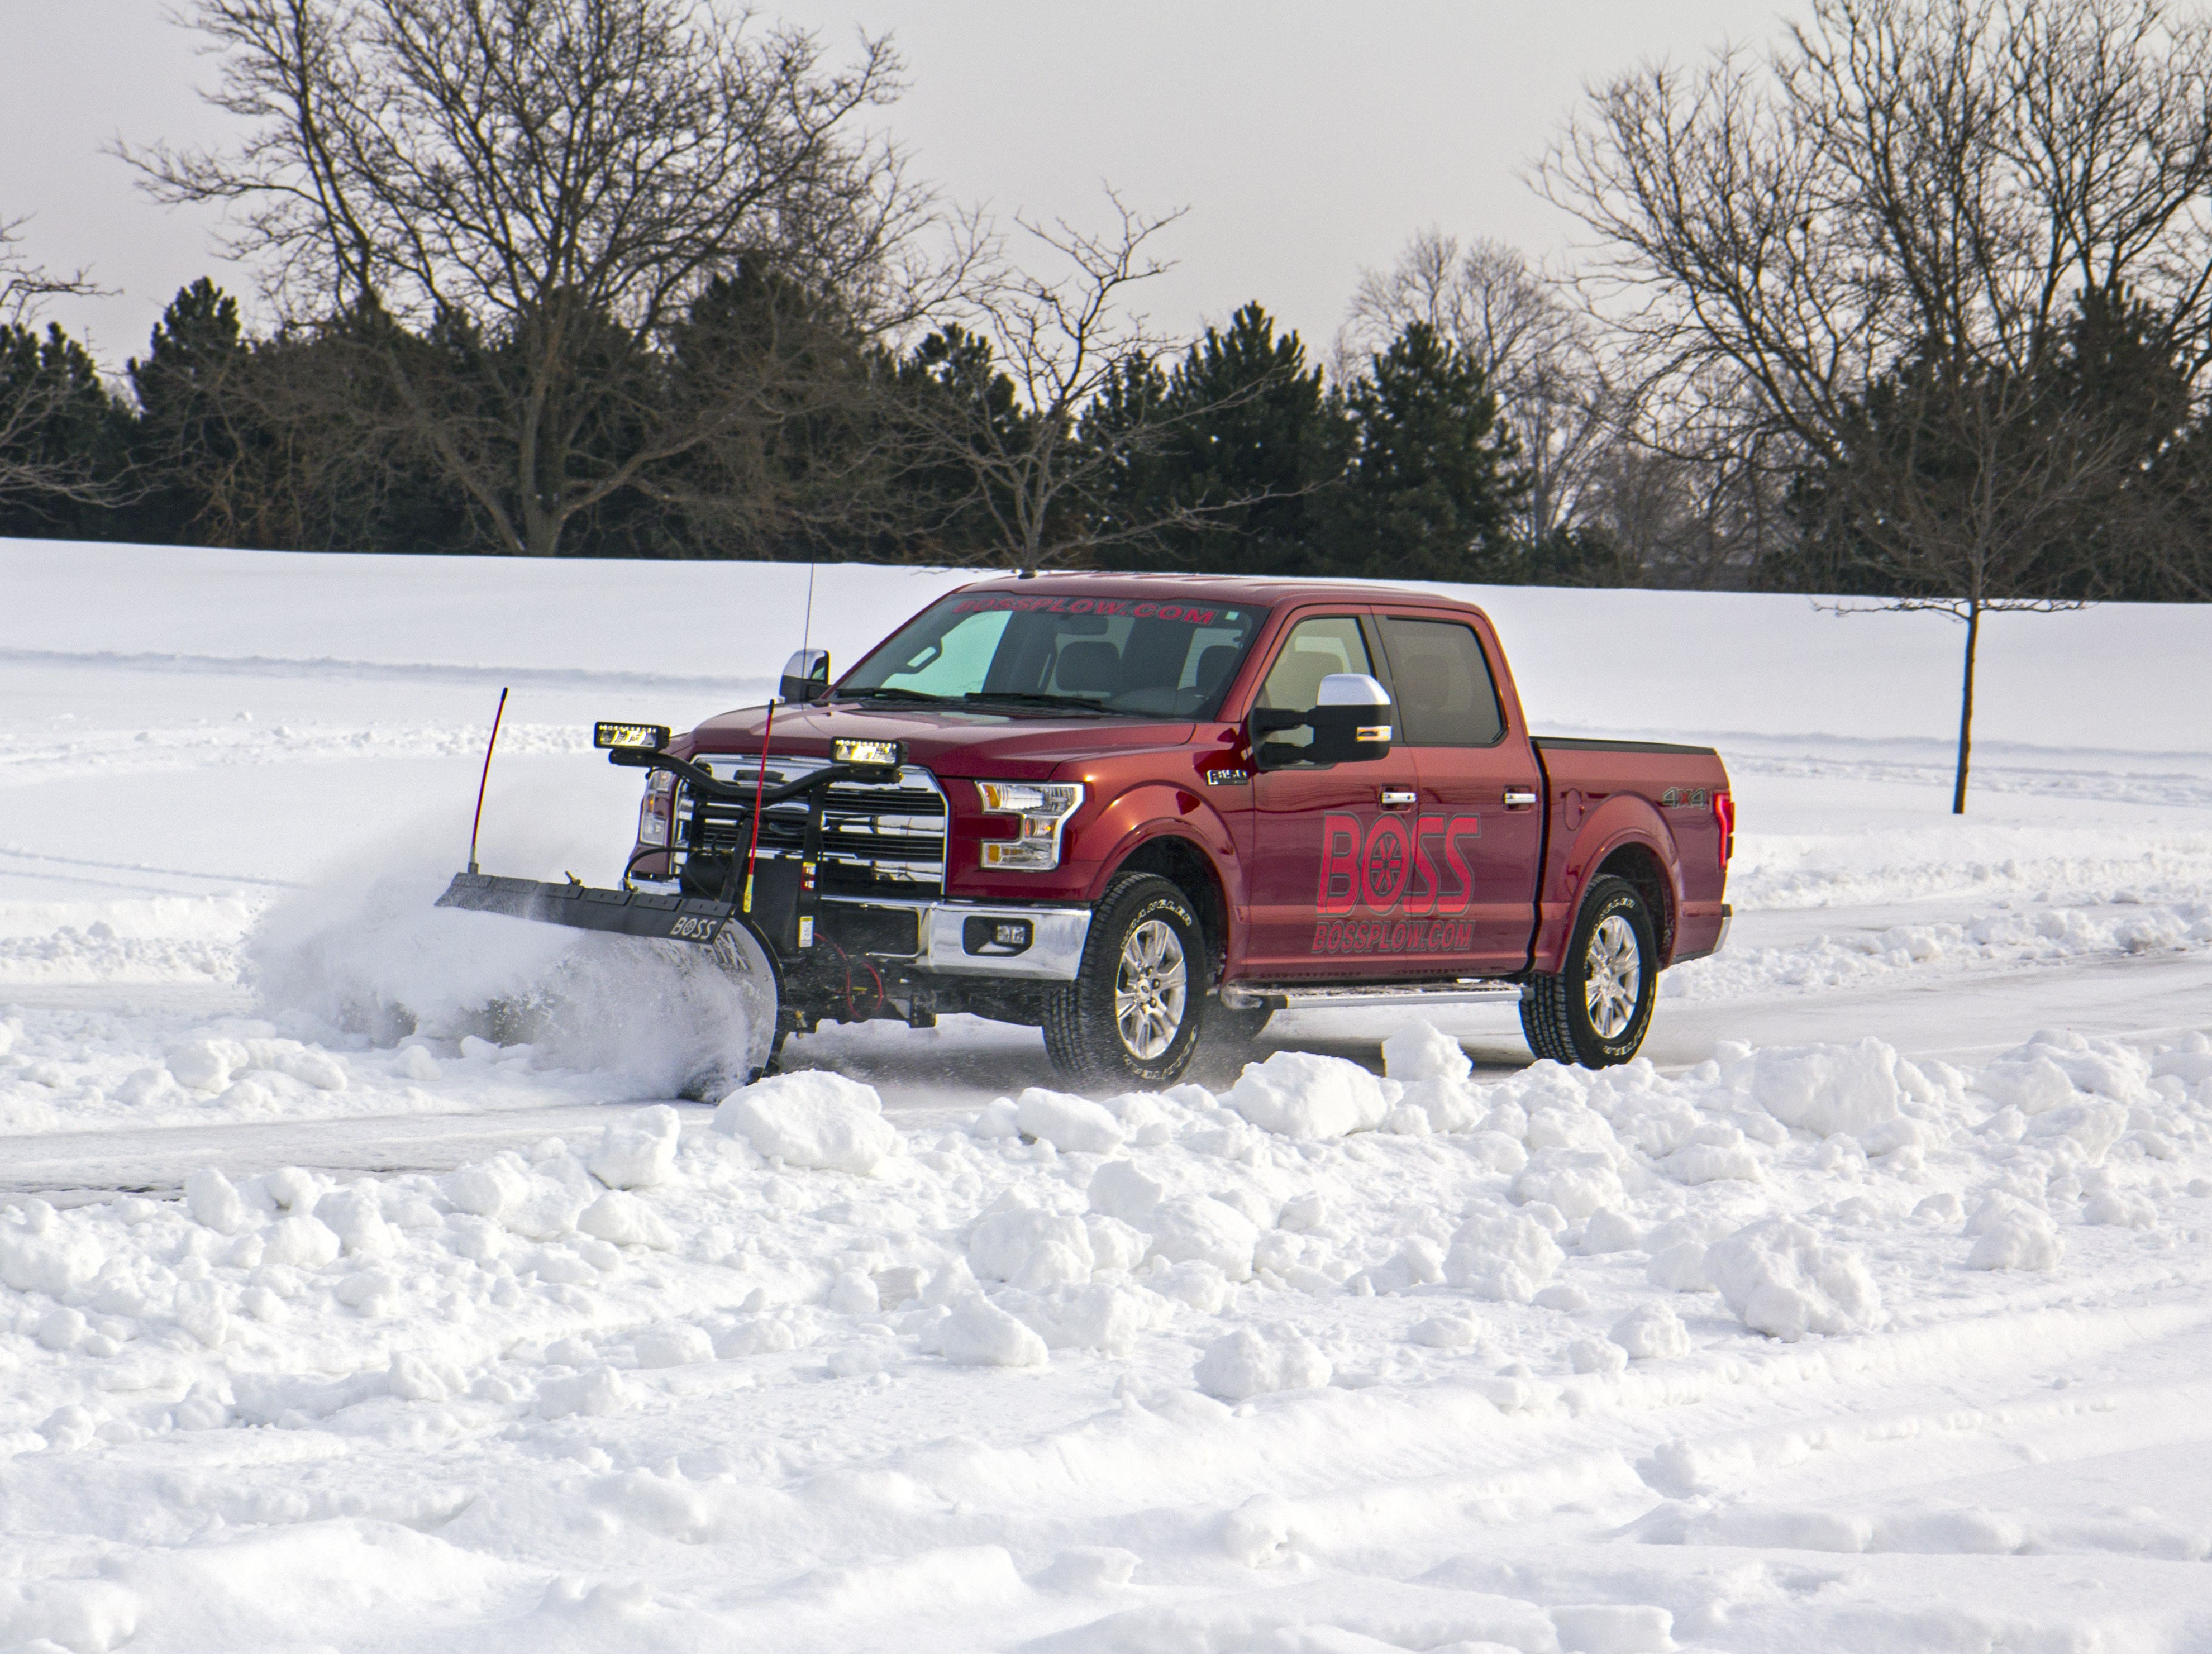 2015 Ford F-150 Snow Plow Option Costs 50 Bucks Sans the Plow.